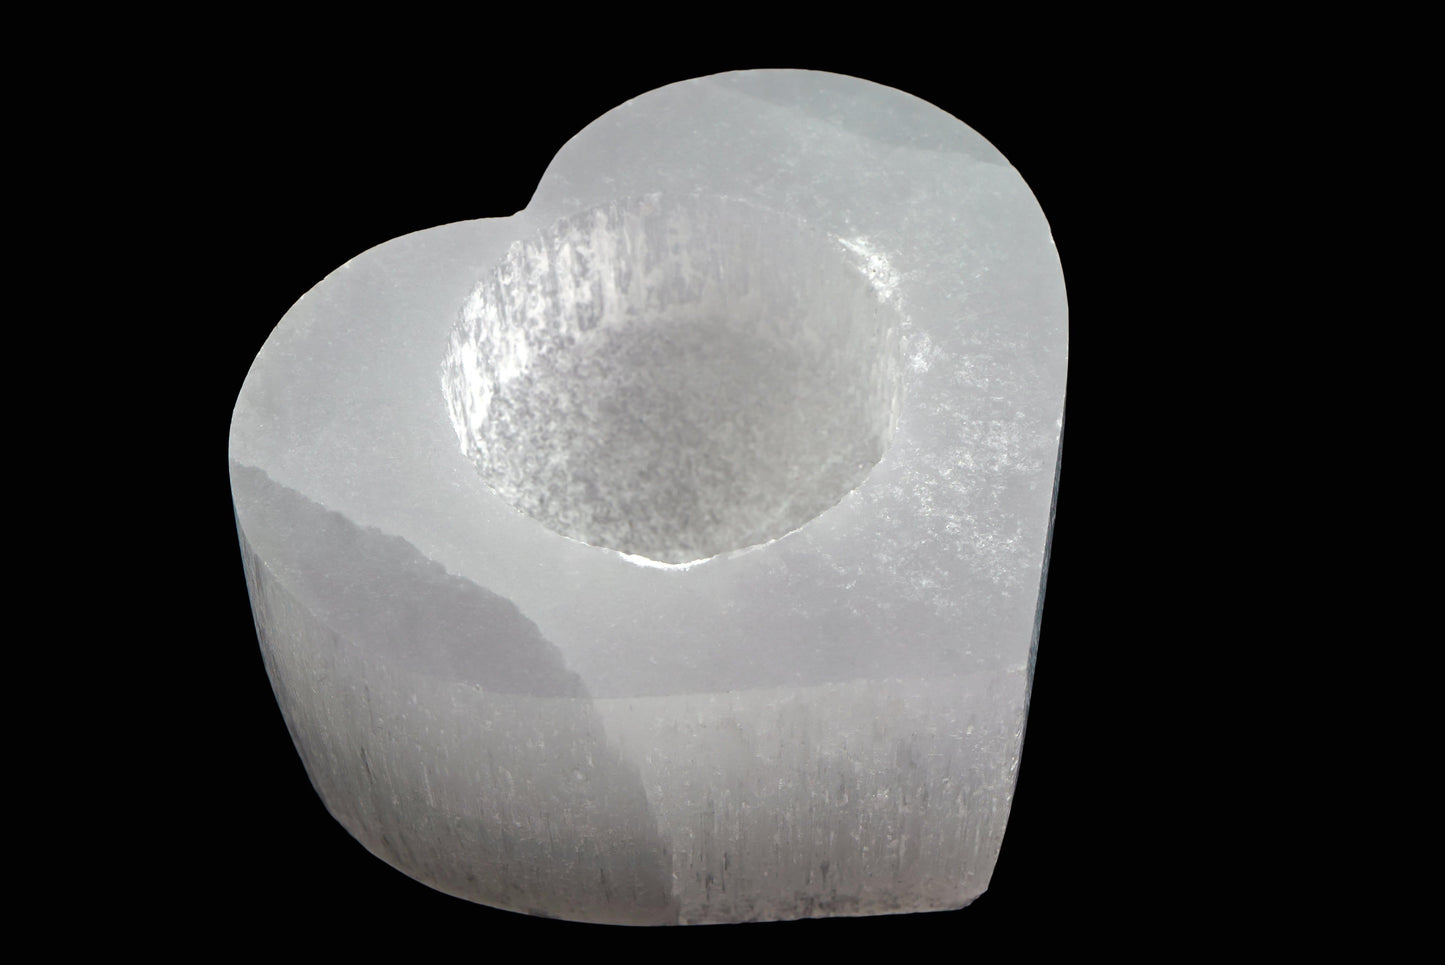 Selenite Heart Candle Holder crystal